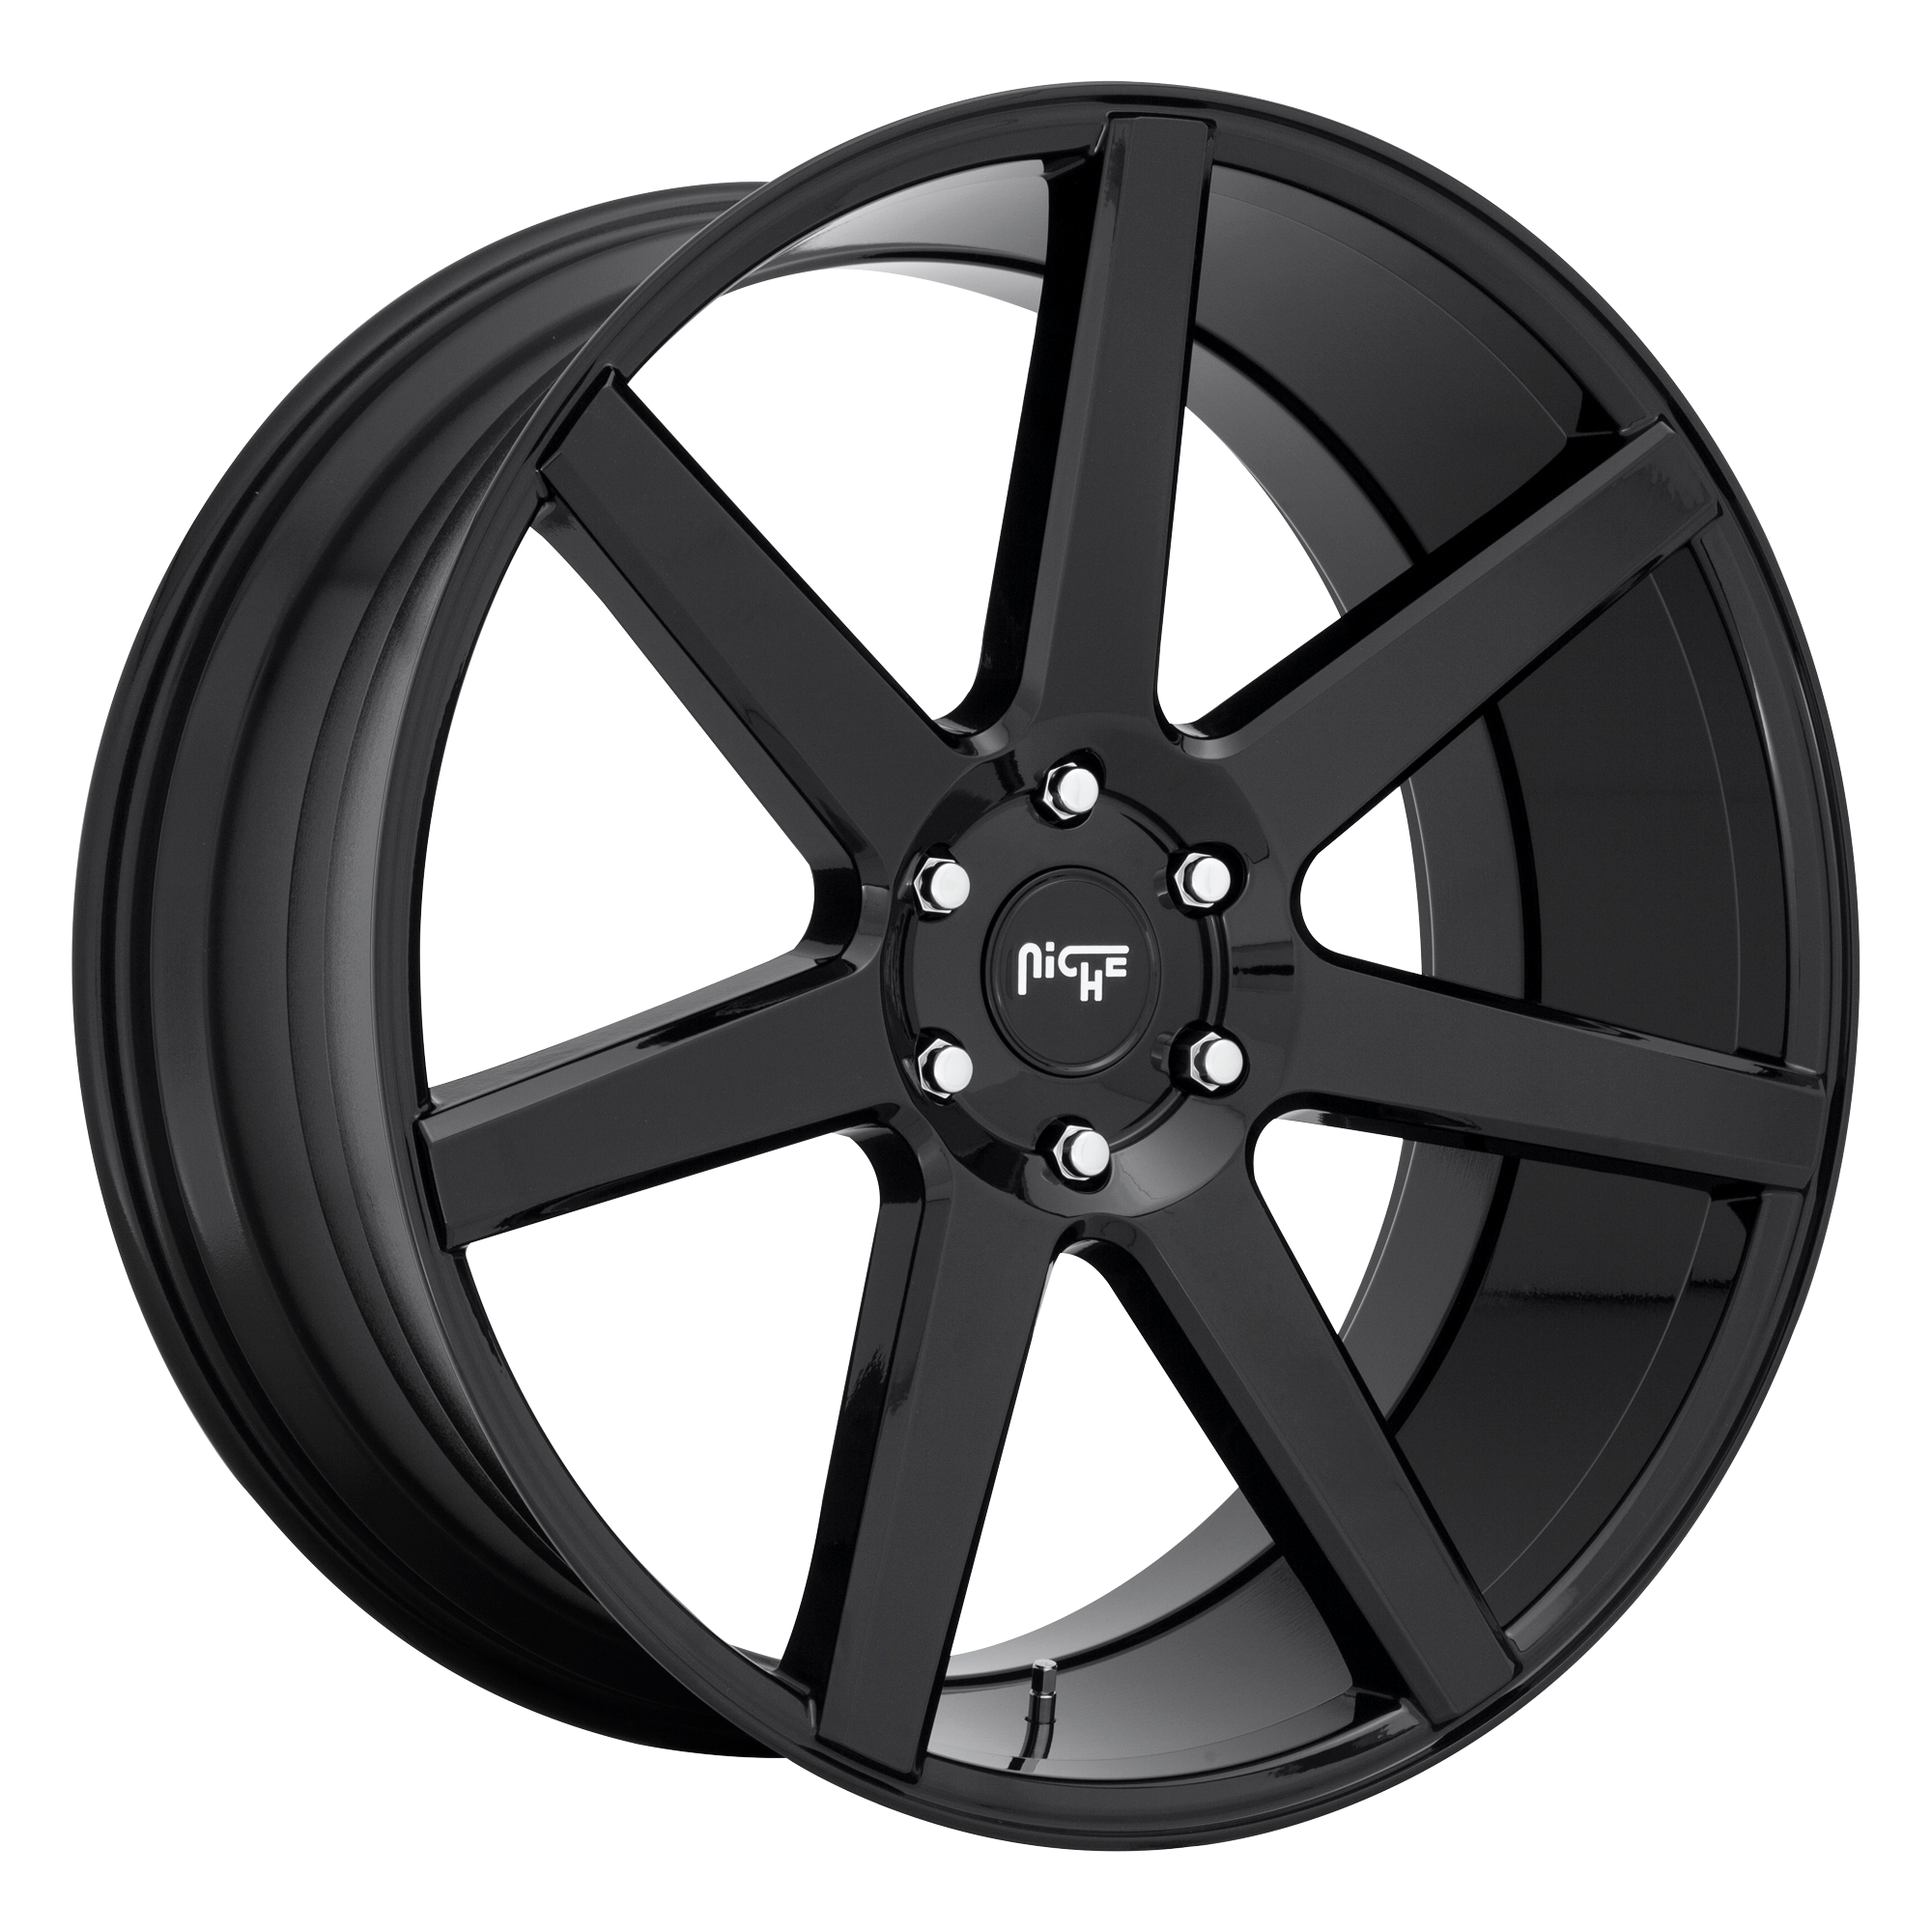 19-inch x 9-inch low-gloss ebony black-painted aluminum wheels